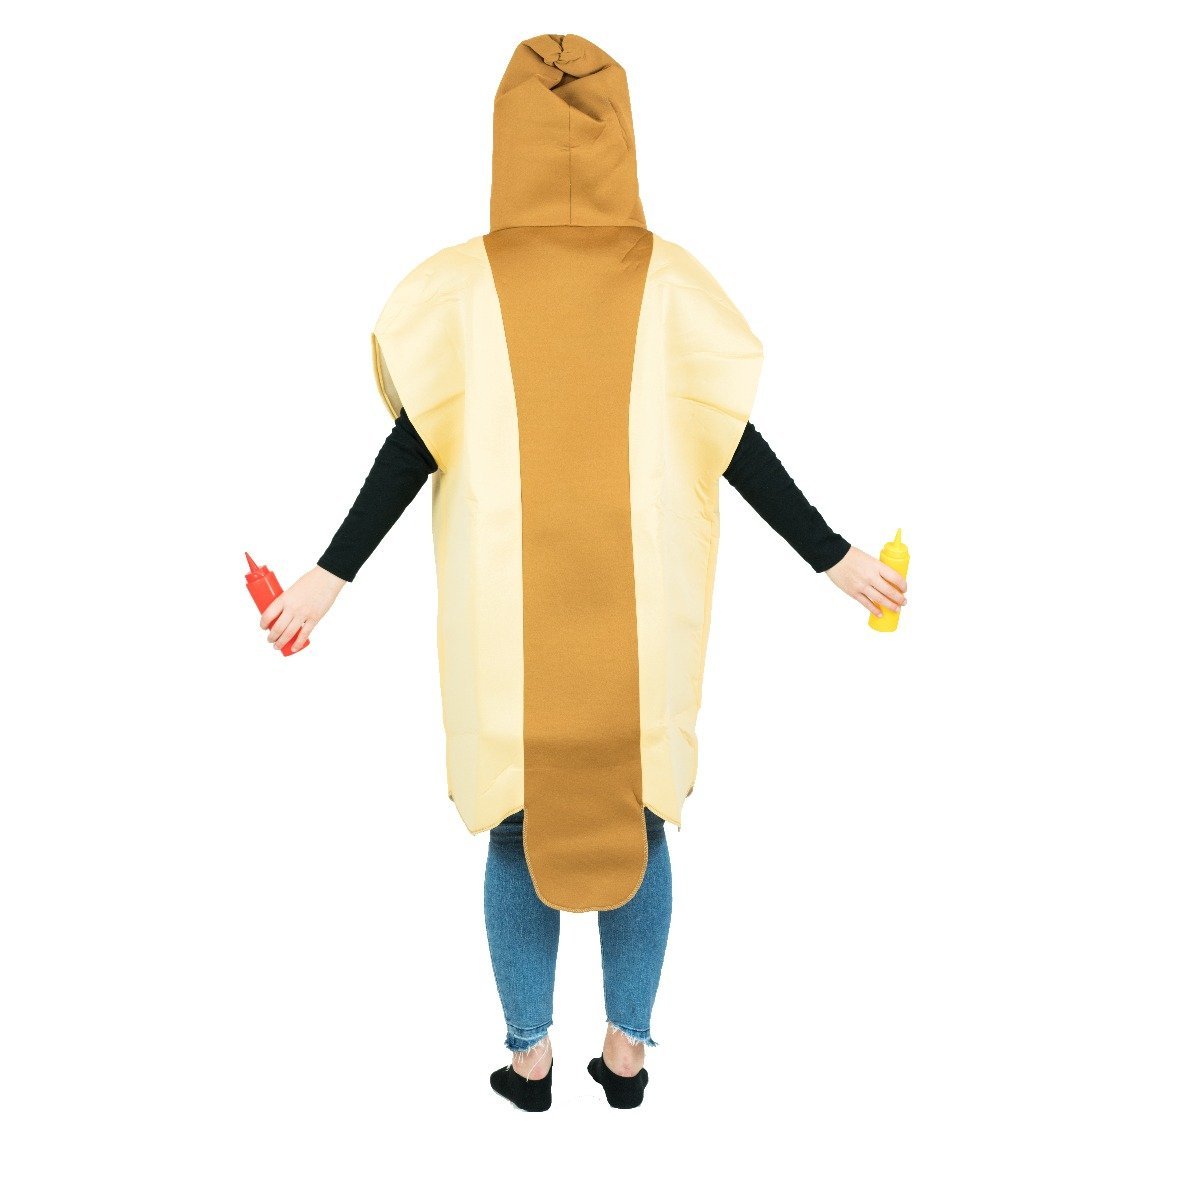 Bodysocks - Hot Dog Costume